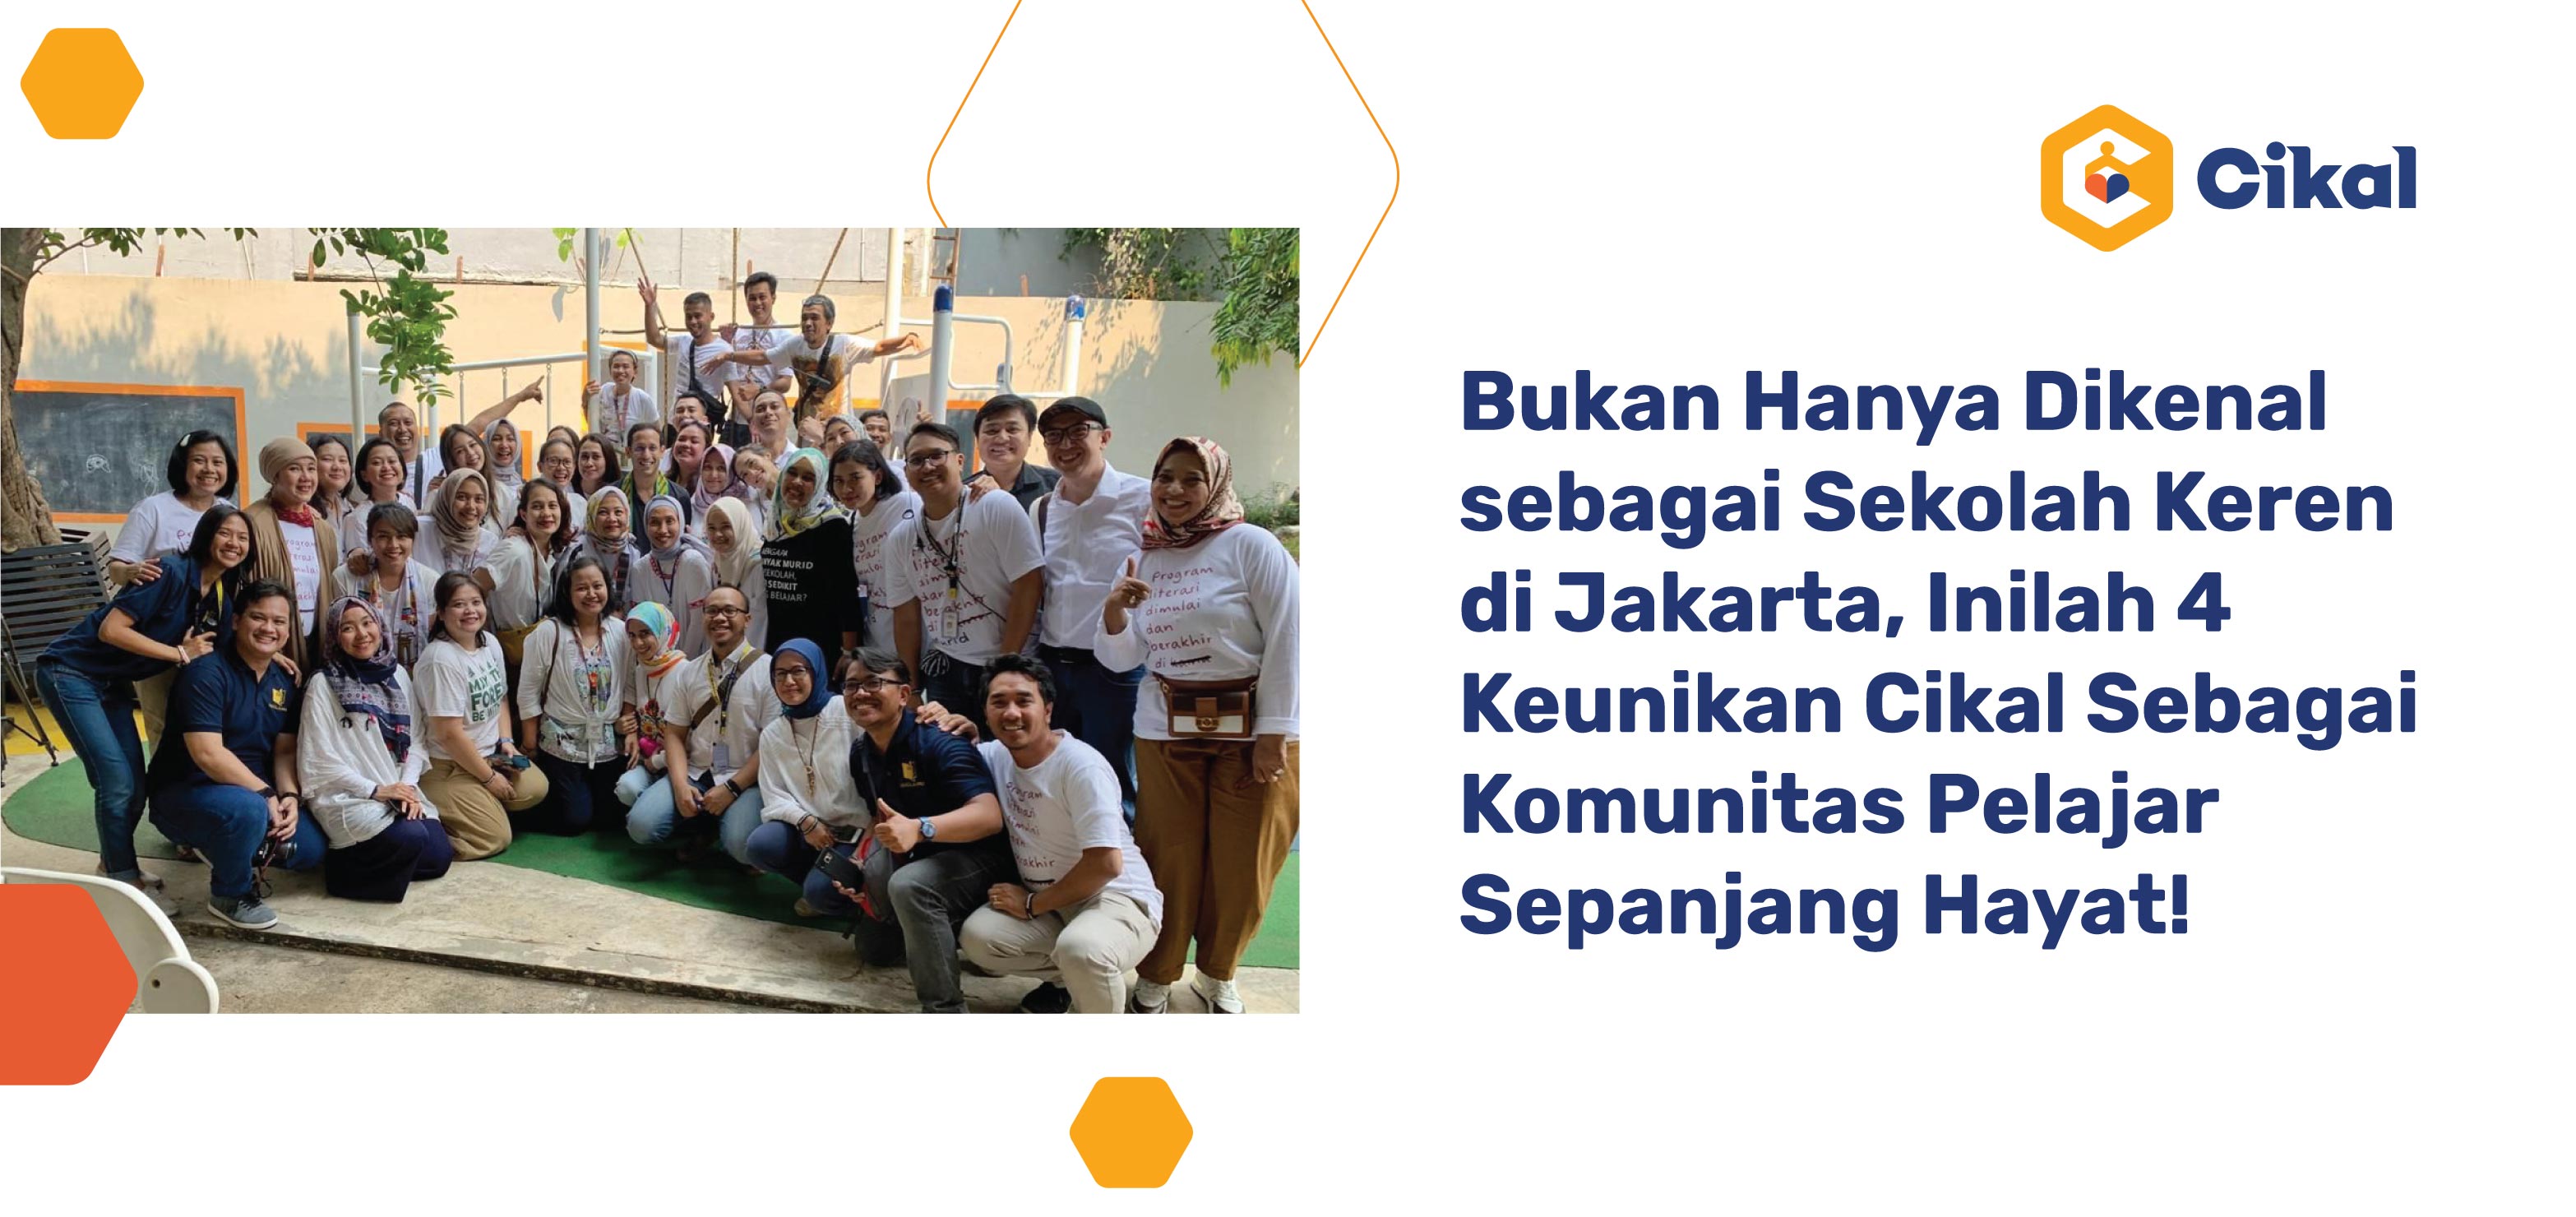 Bukan Hanya Dikenal sebagai Sekolah Keren di Jakarta,  Inilah 4 Keunikan Cikal Sebagai Komunitas Pelajar Sepanjang Hayat!